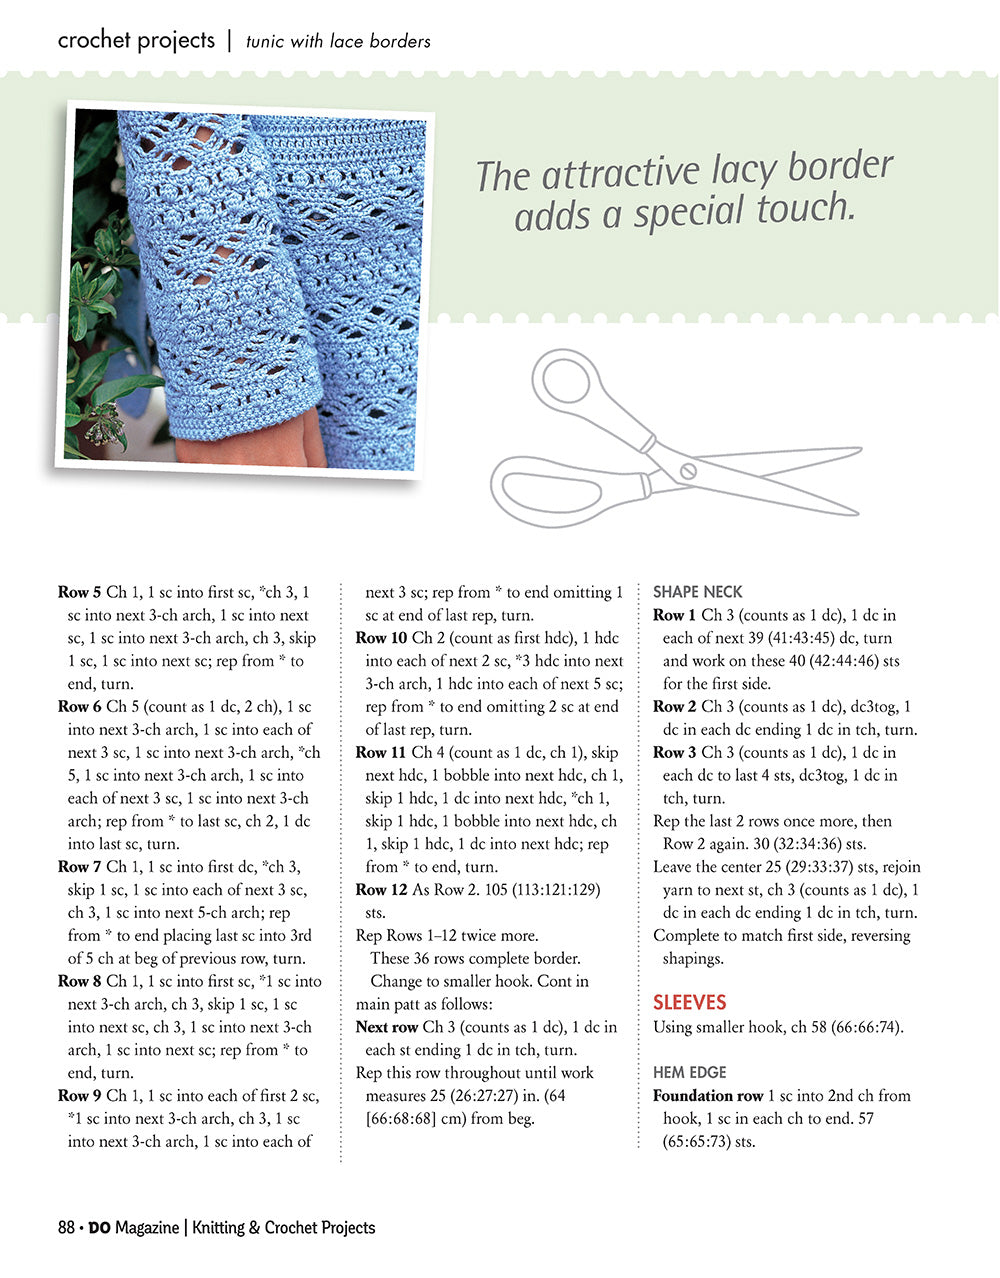 DO Magazine Presents Knitting & Crochet Projects